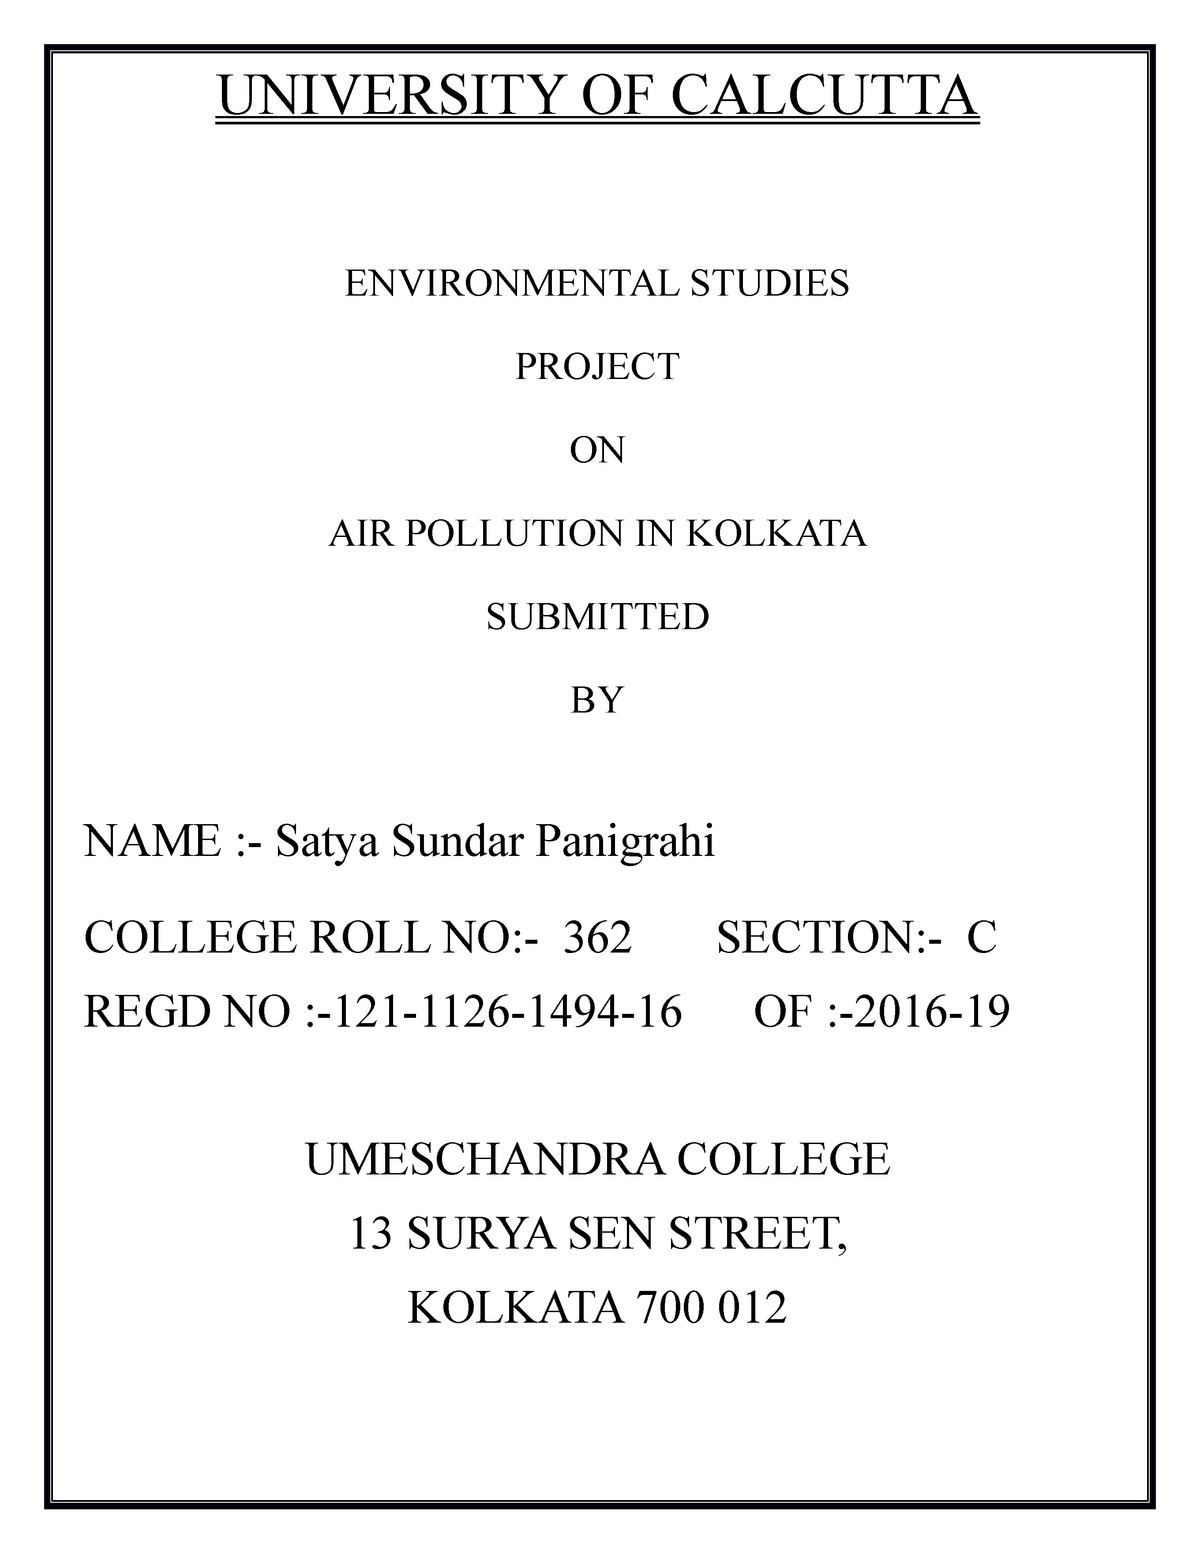 Environmental Studies Report On Air Pollution In Kolkata - UNIVERSITY ...